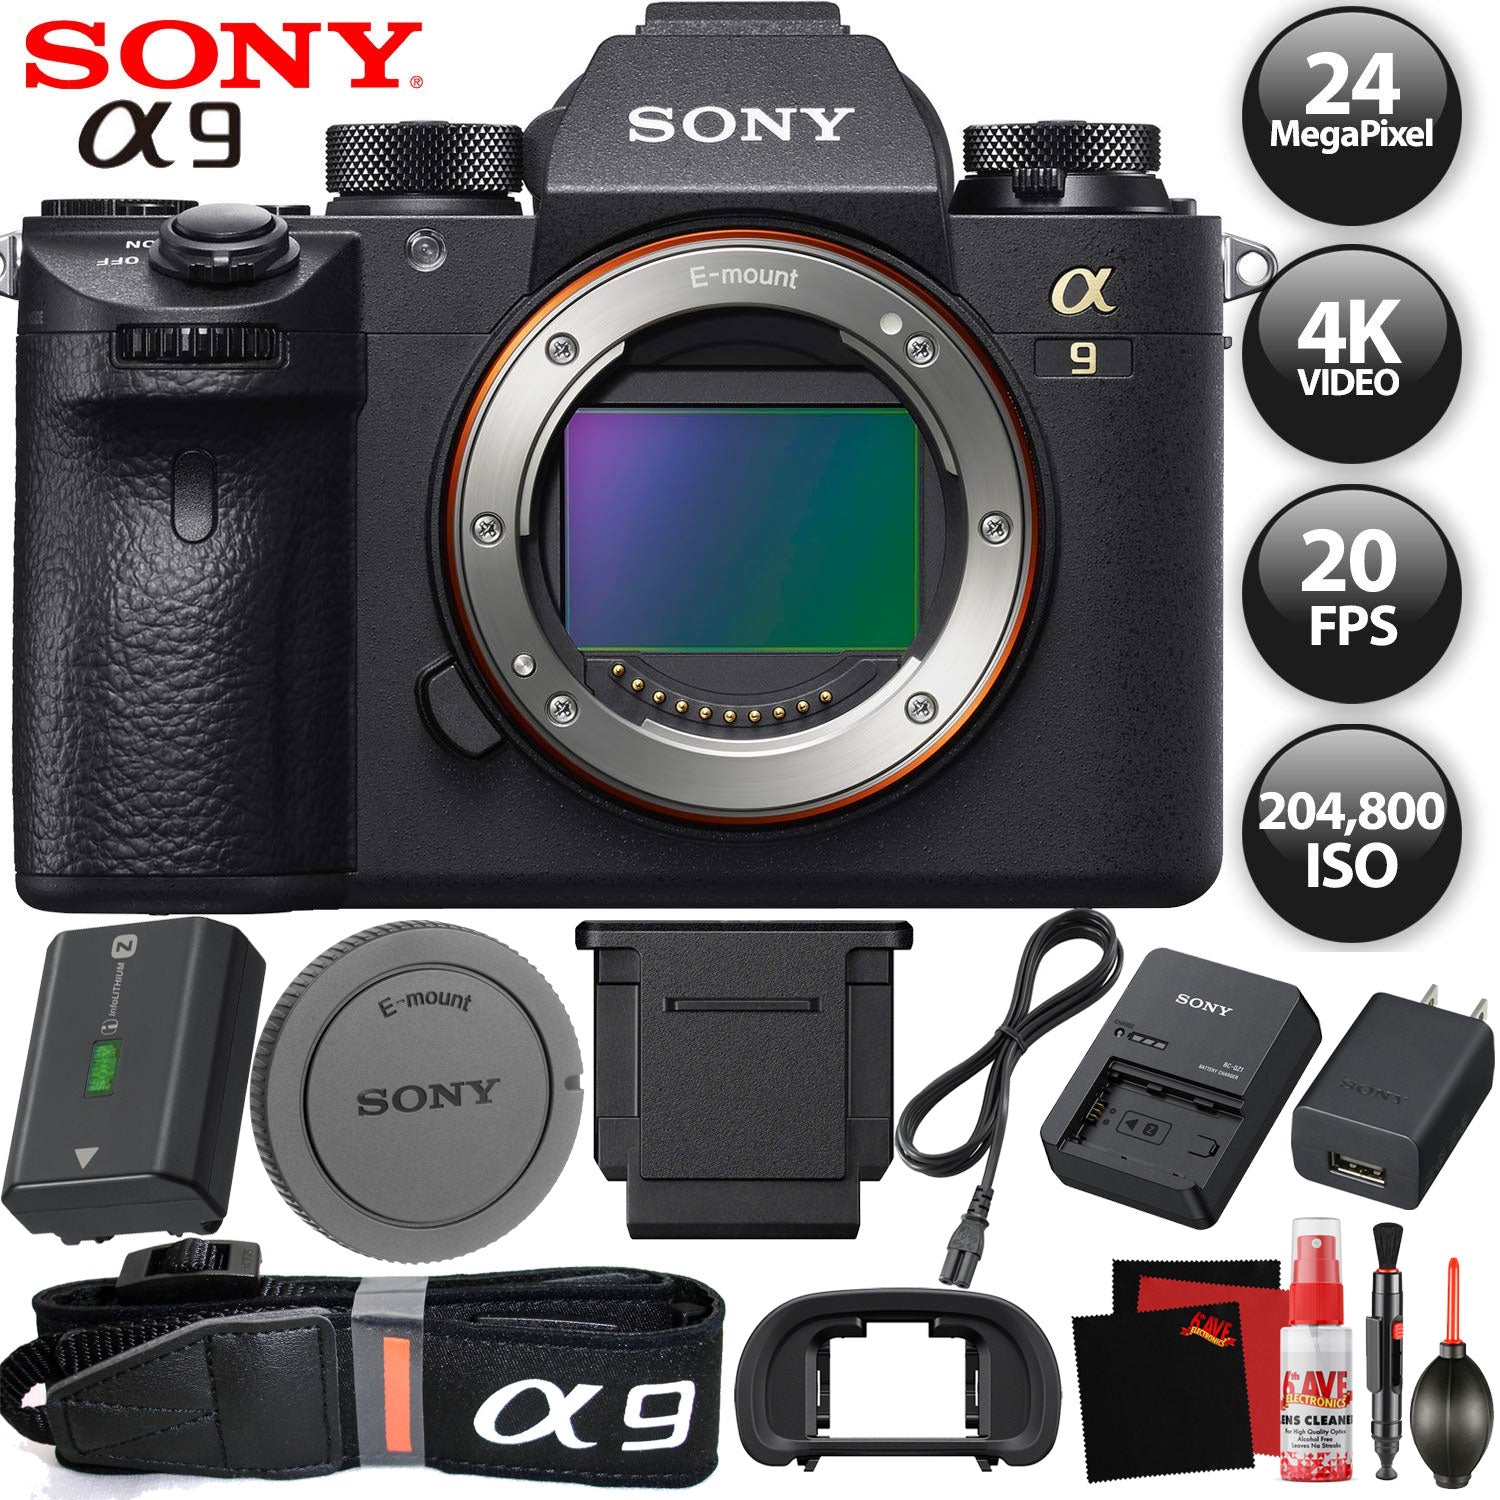 Sony Alpha a9 Mirrorless Digital Camera International Model - 4k Video - 20FPS Shooting - 24.2 Megapixels - Starter Bundle